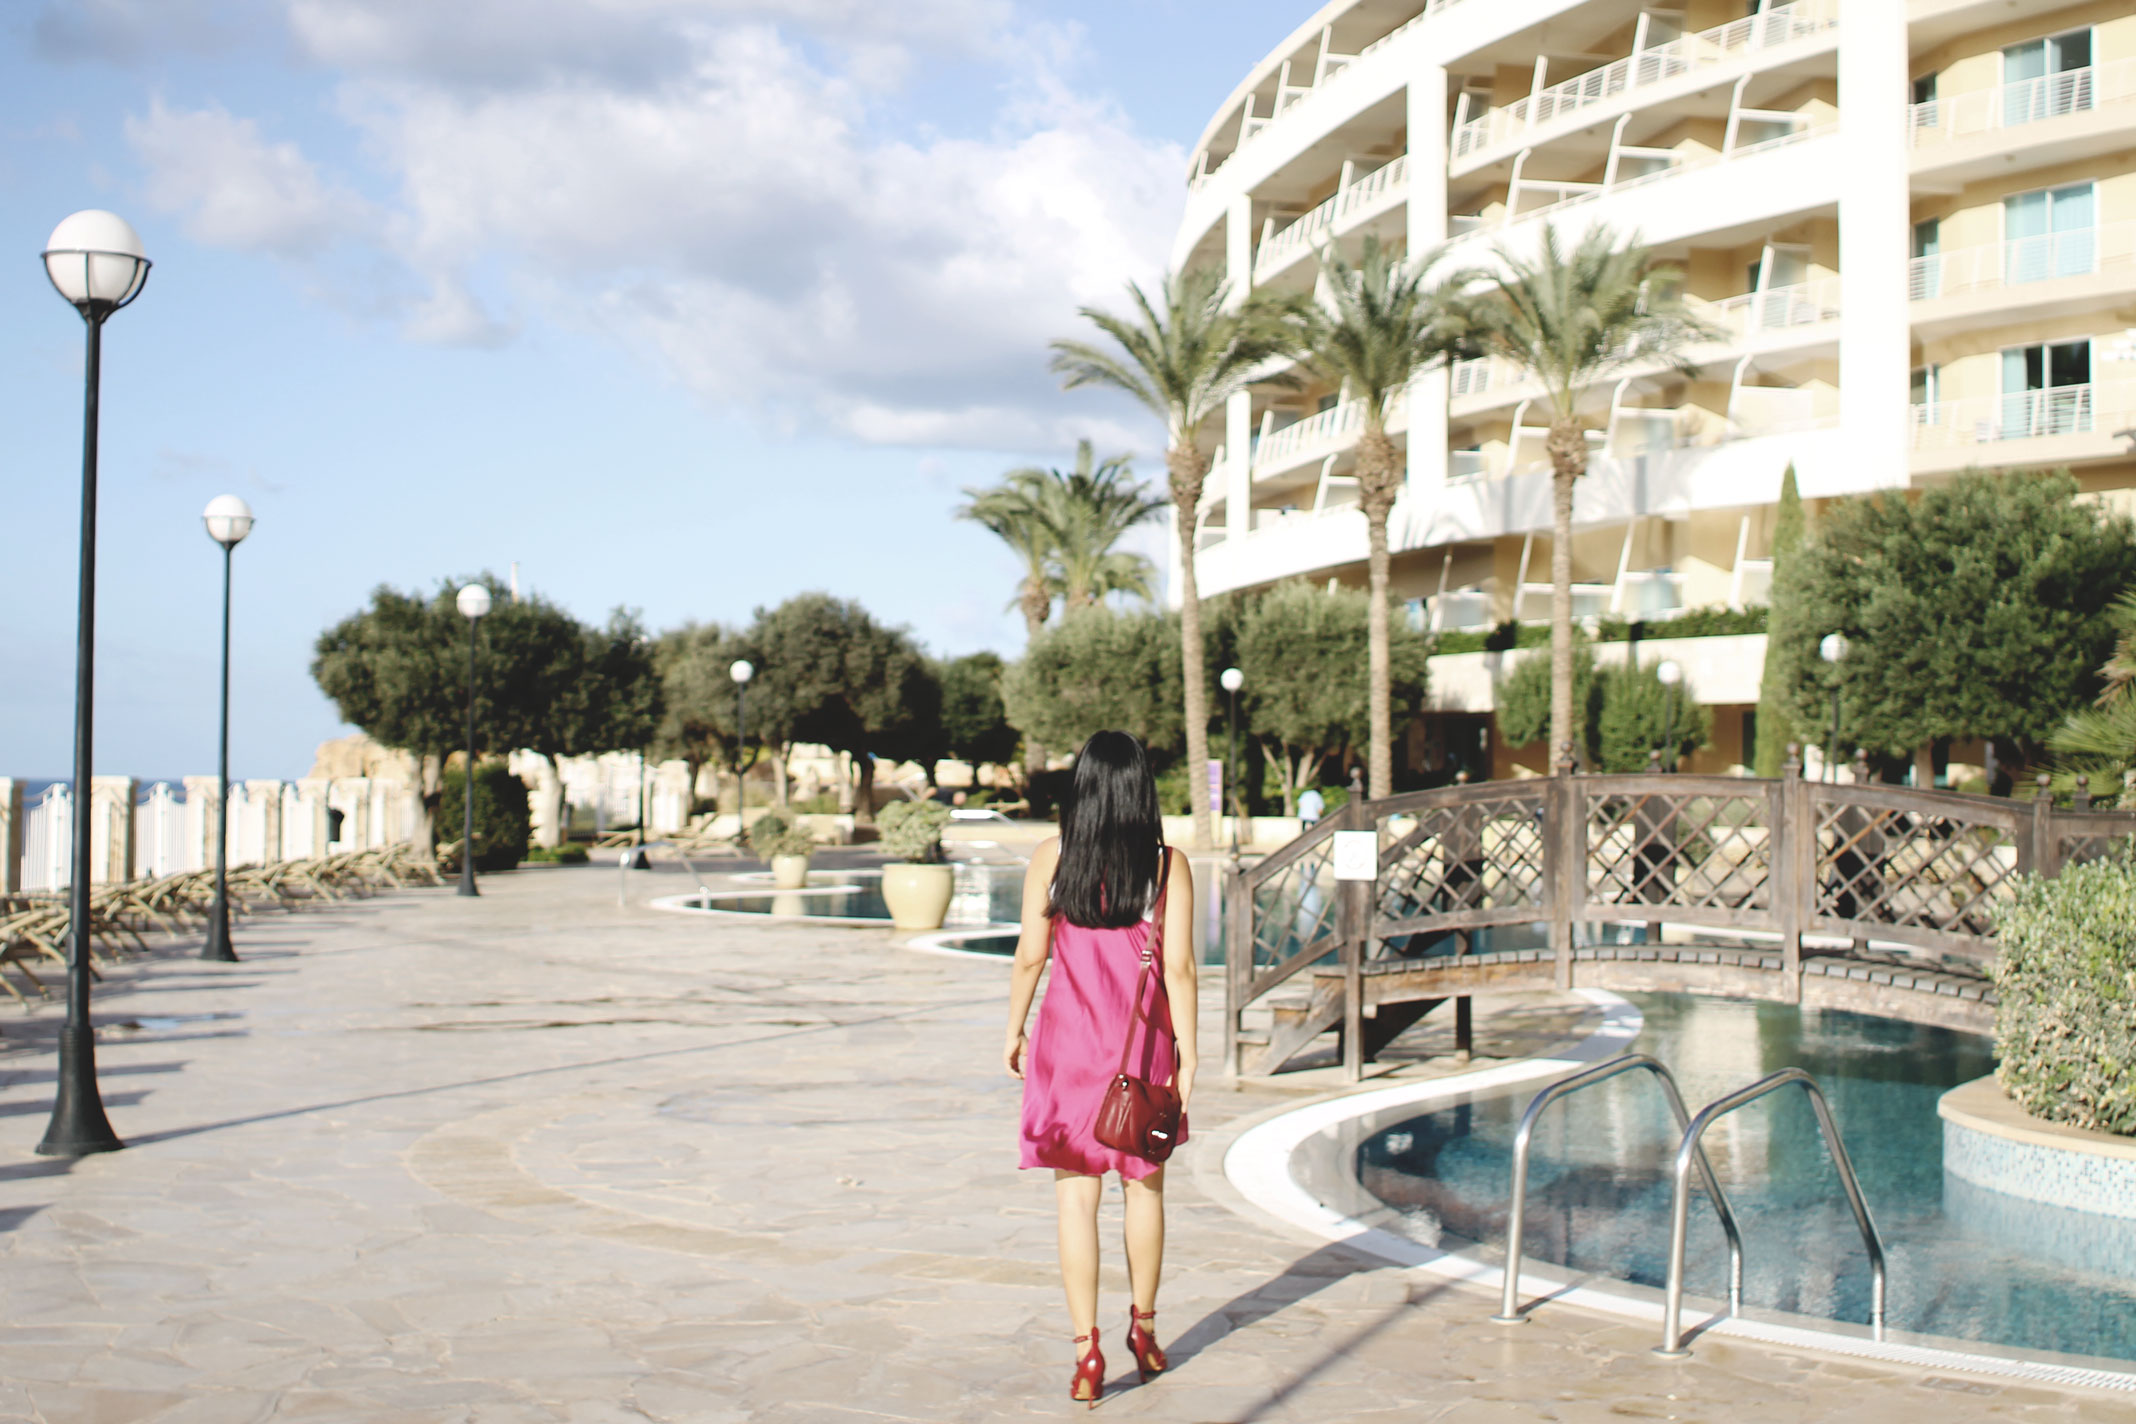 Styleat30 Fashion & Travel Blog - Radisson Blu Resort & Spa, Malta, Golden Sands Holiday - 17